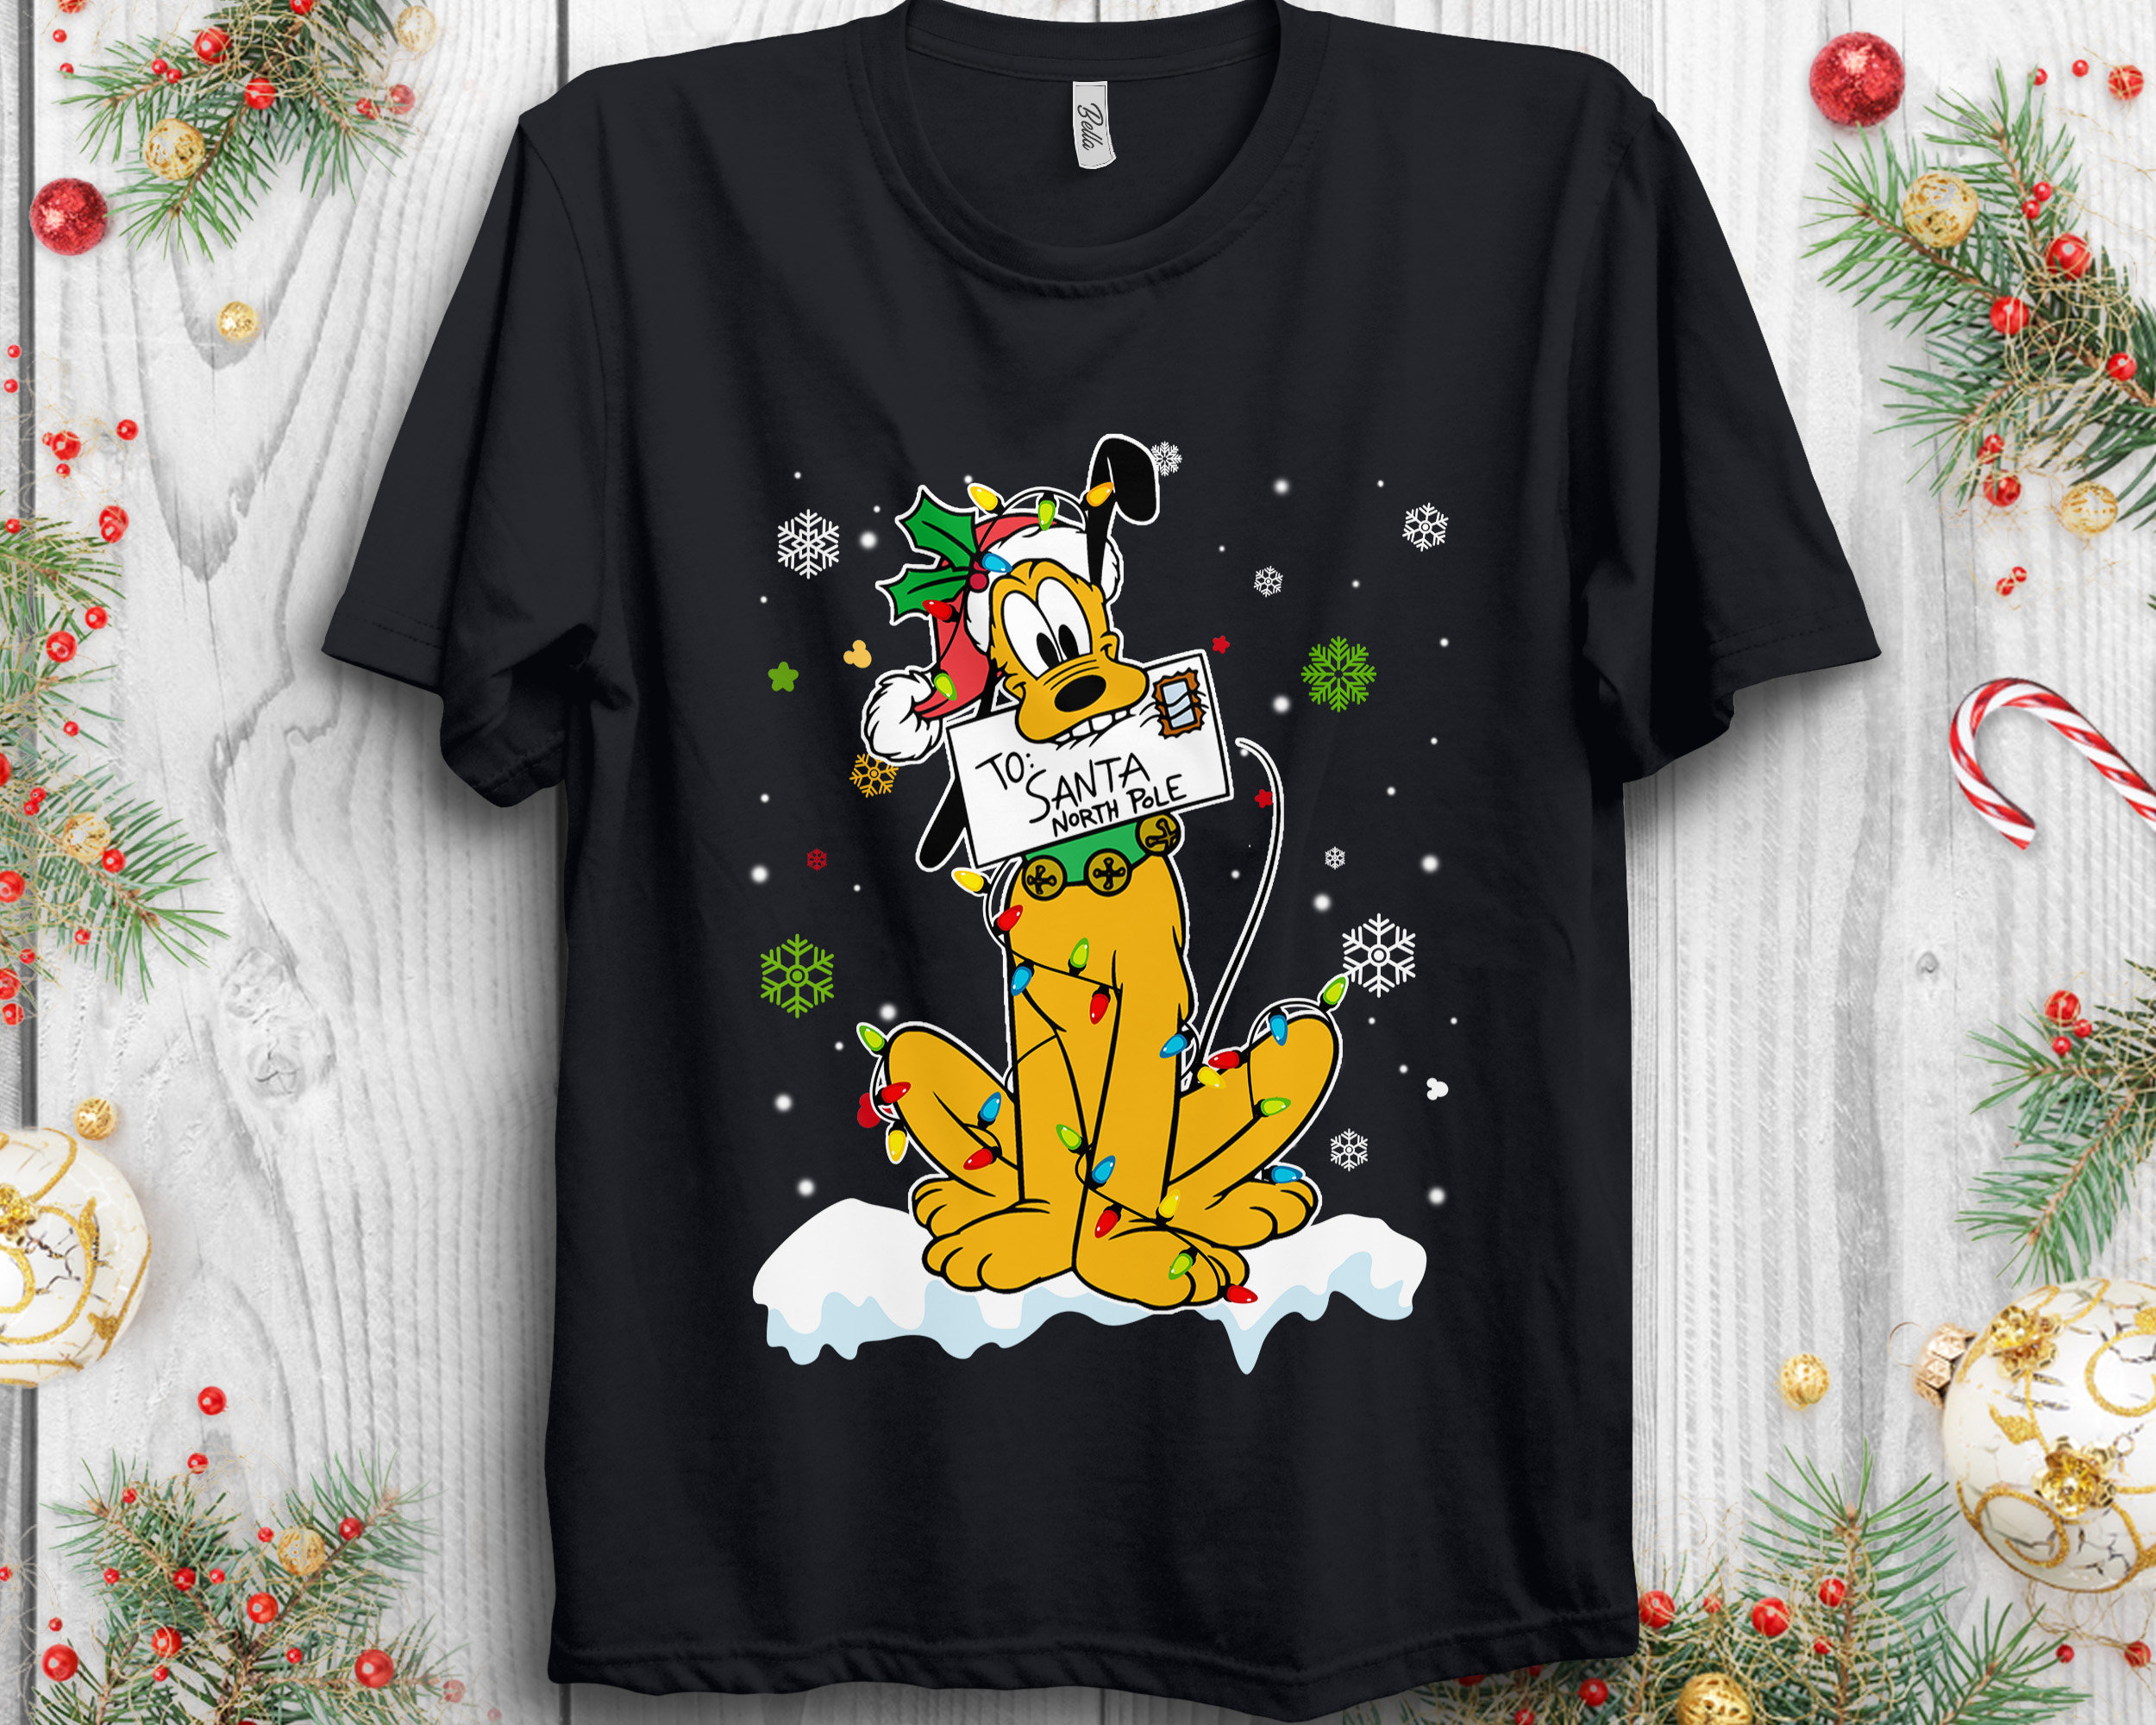 Discover Disney Santa Pluto Dog Christmas Lights, Mickey and Friends Christmas tee